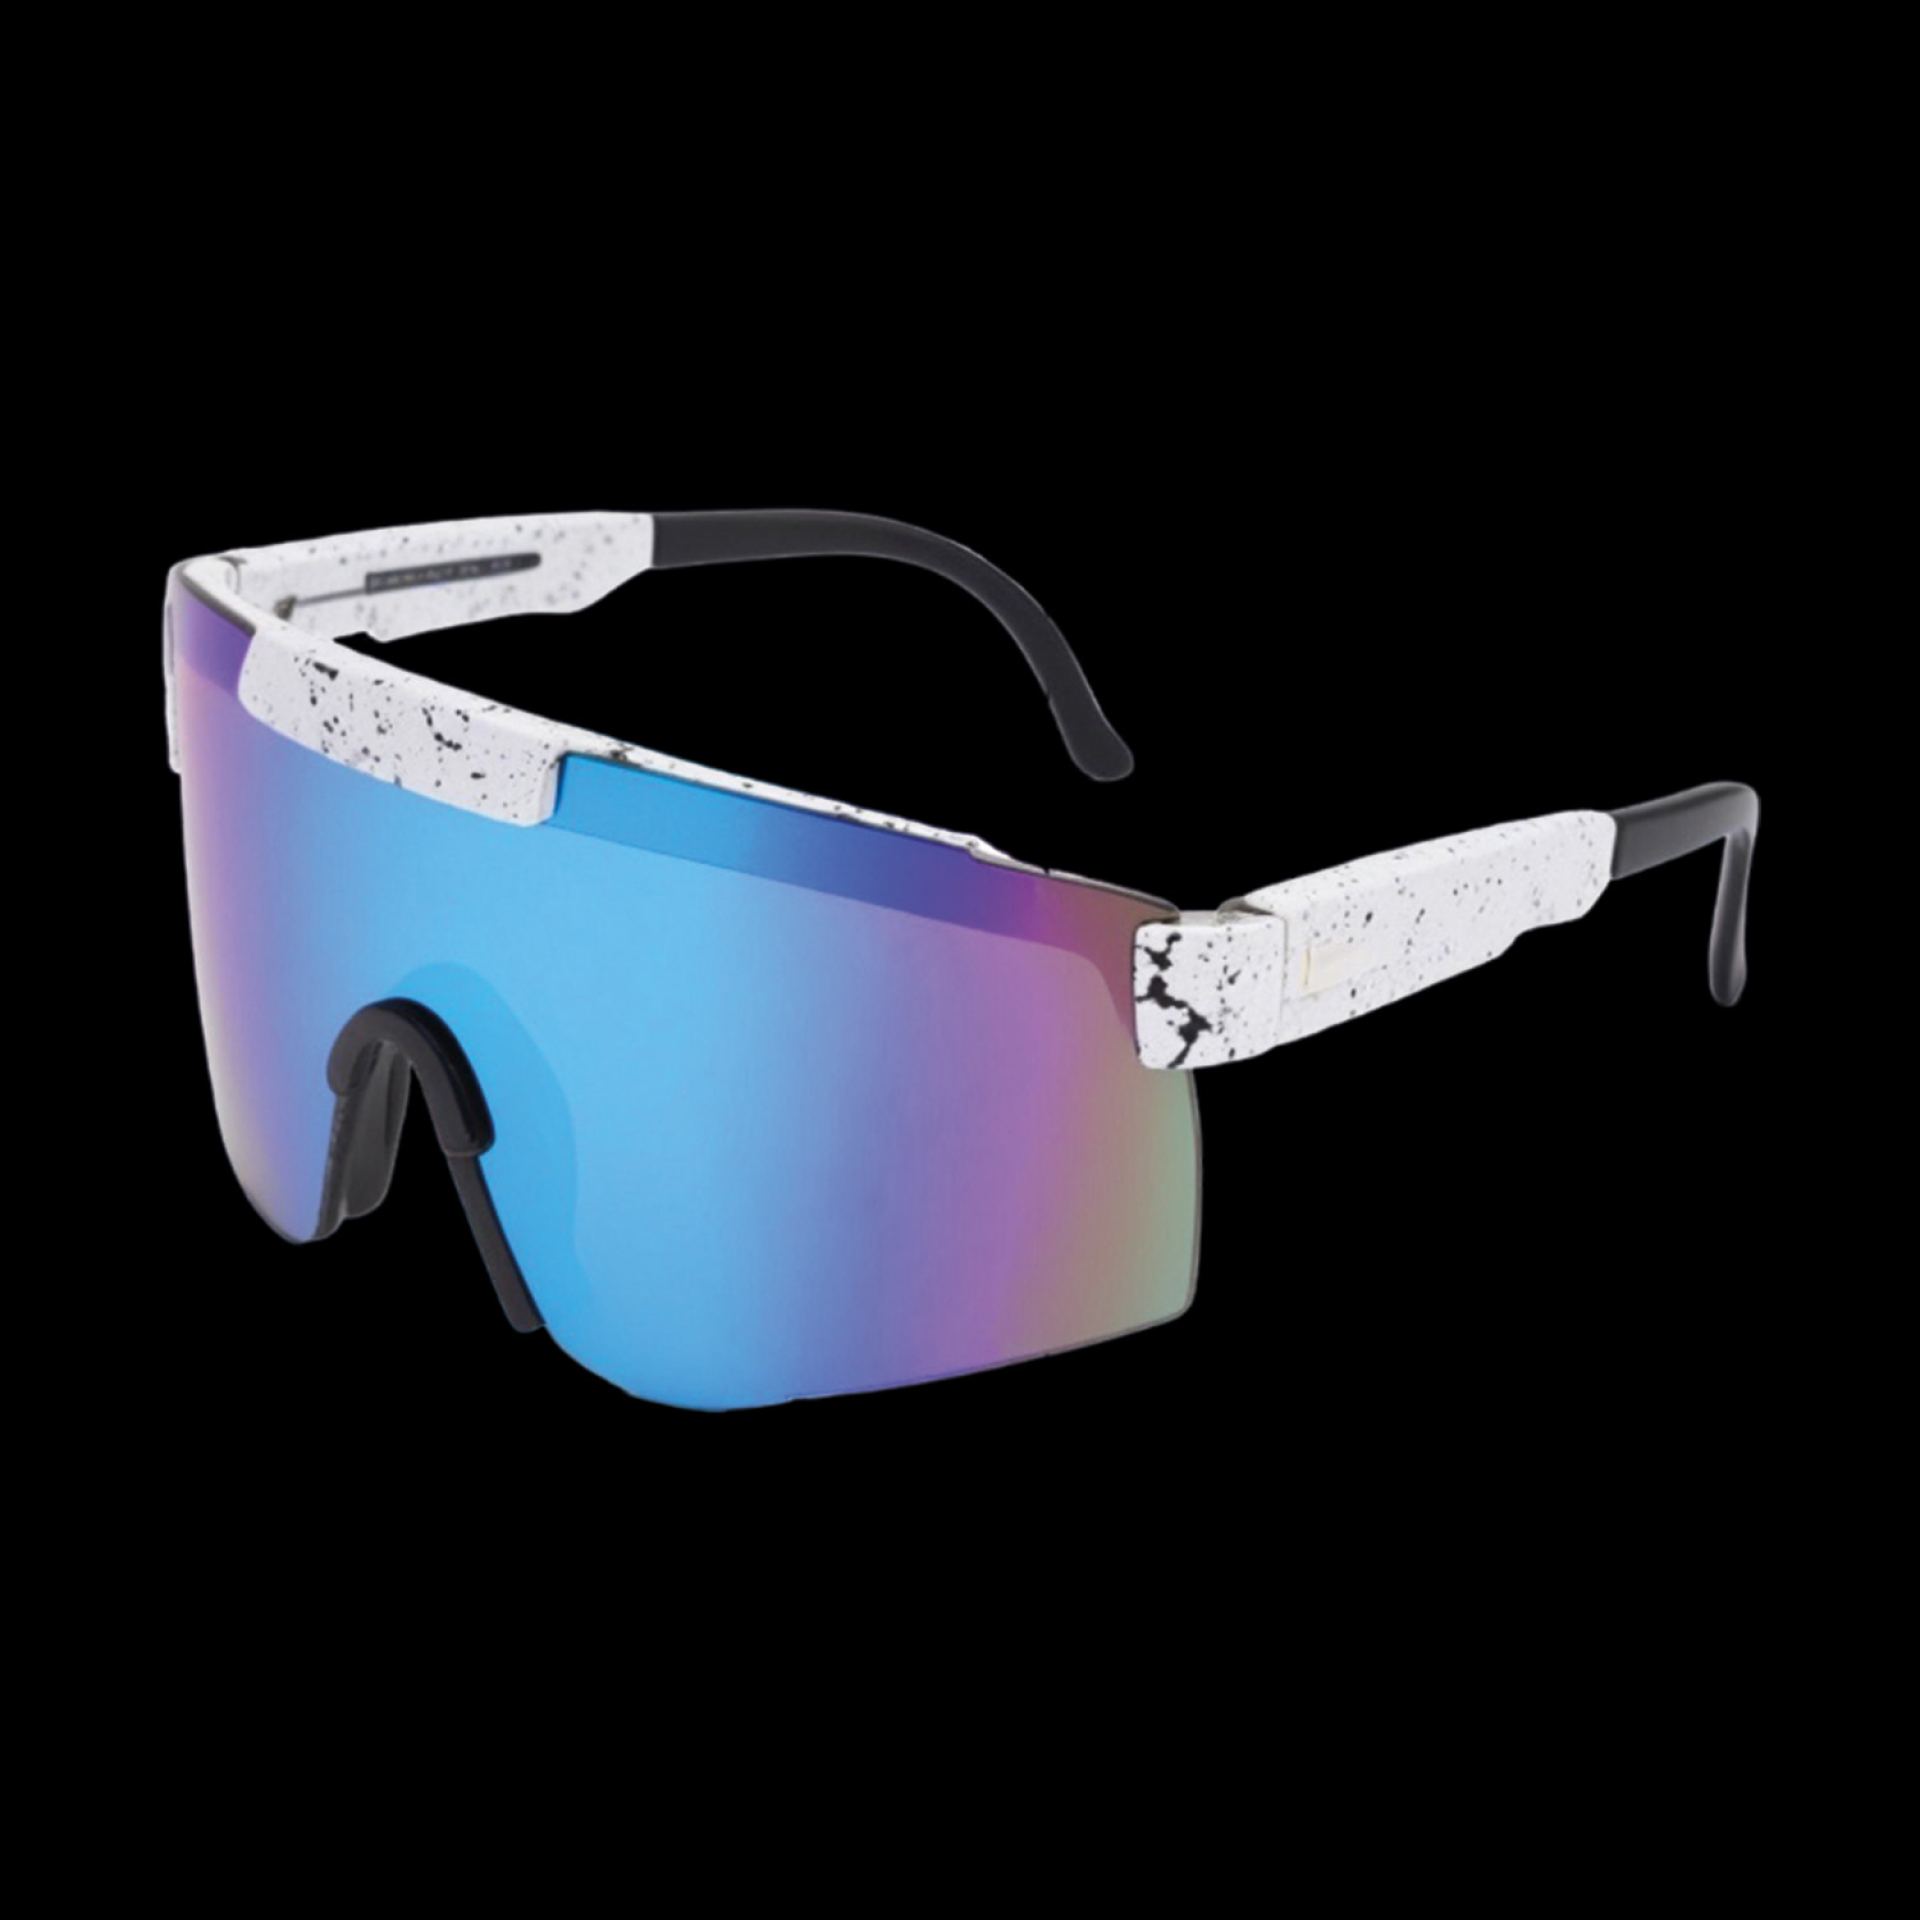 Rave bril sport zonnebril wit/blauw